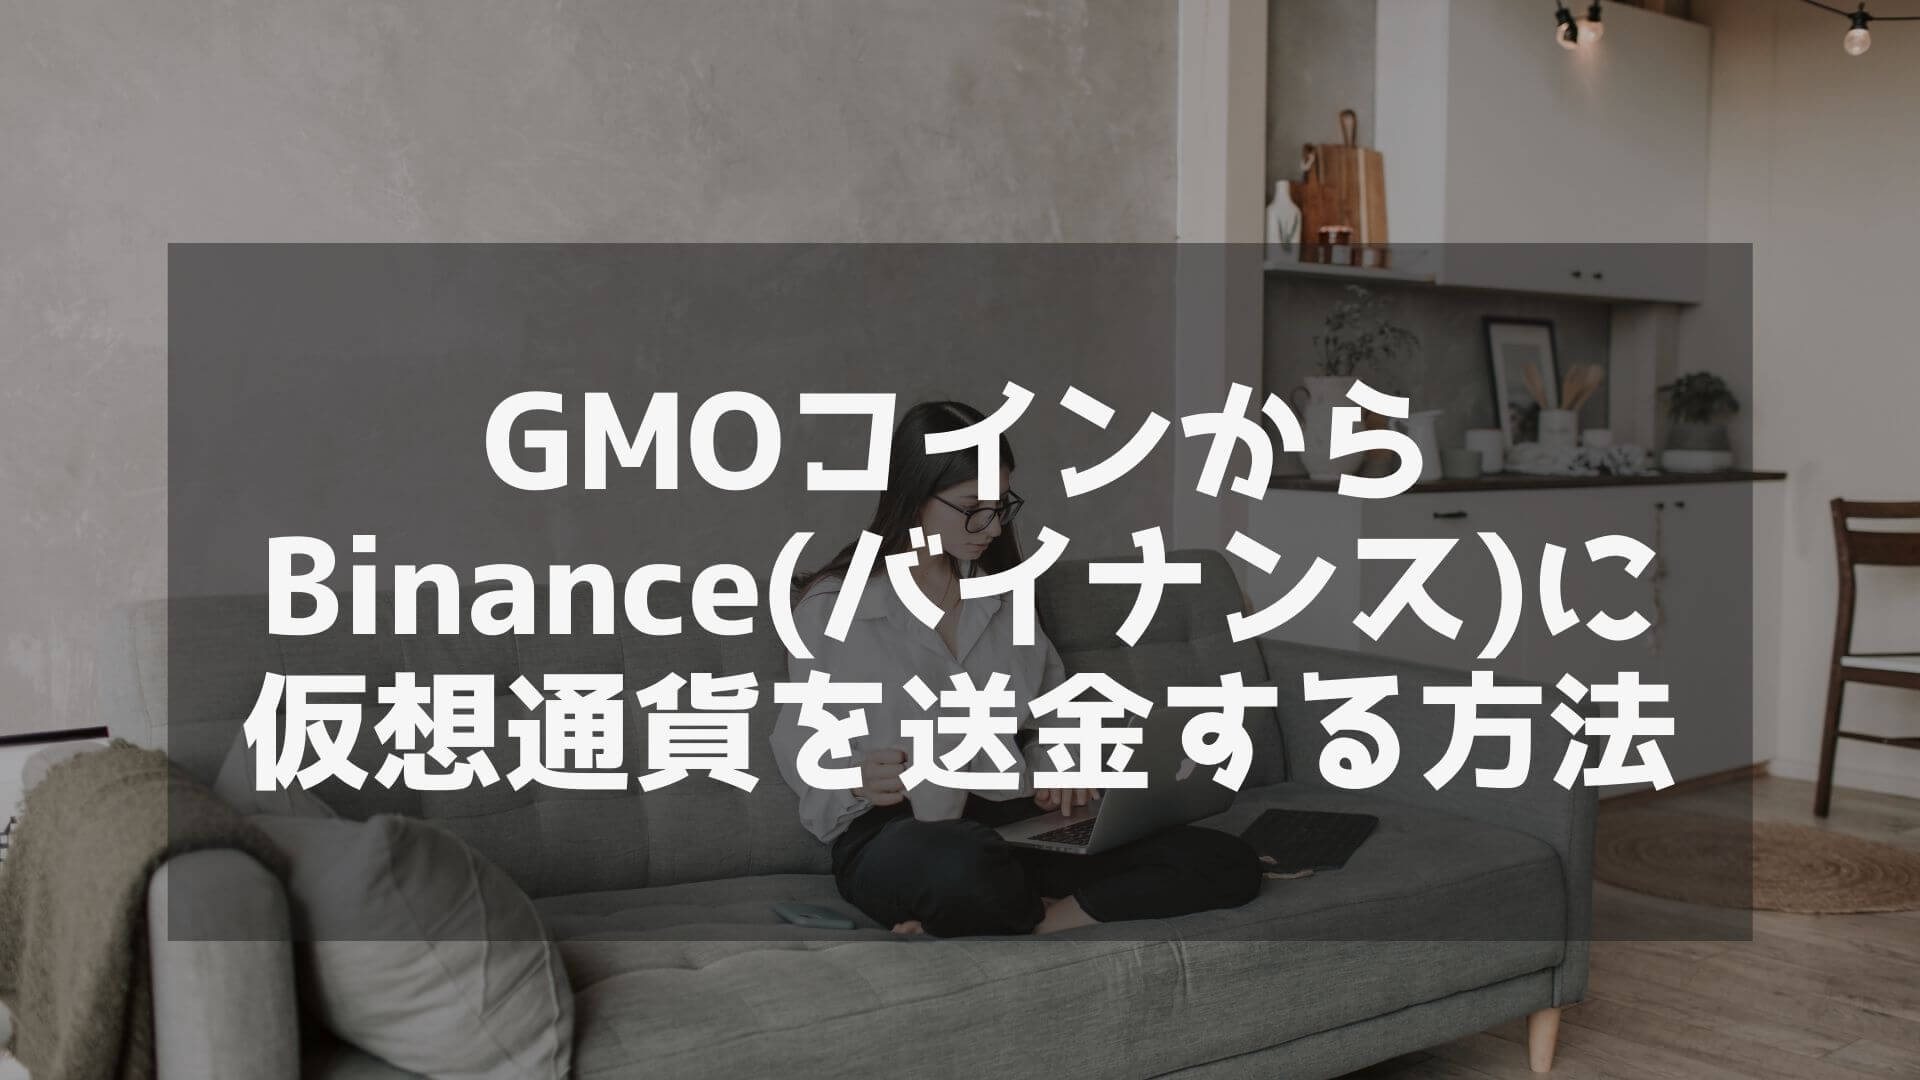 GMO Coin Virtual Currency Binance Remittance